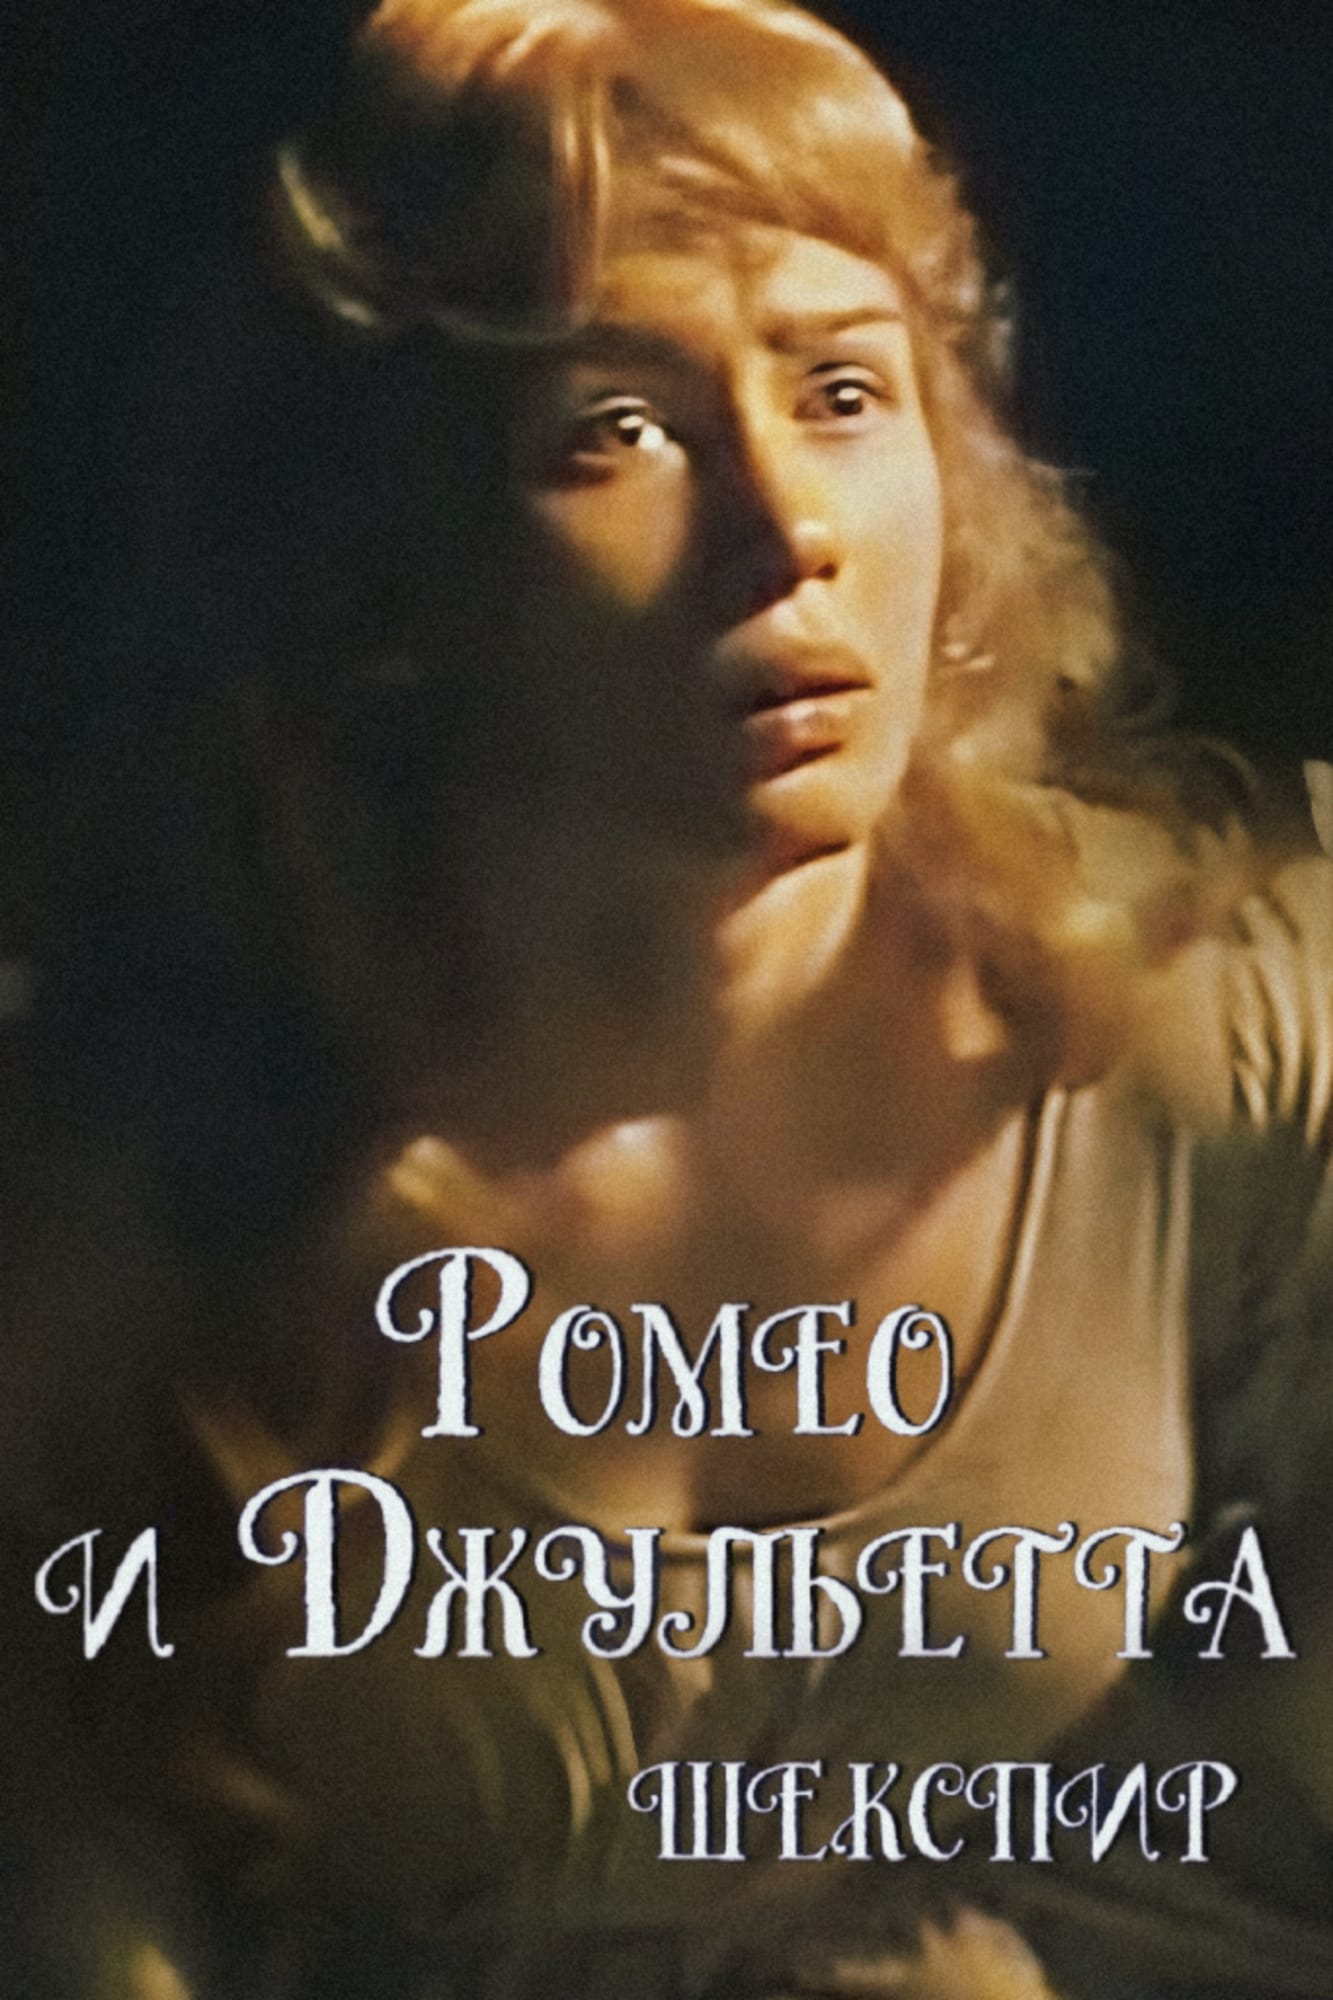 Romeo and Juliet (1983)